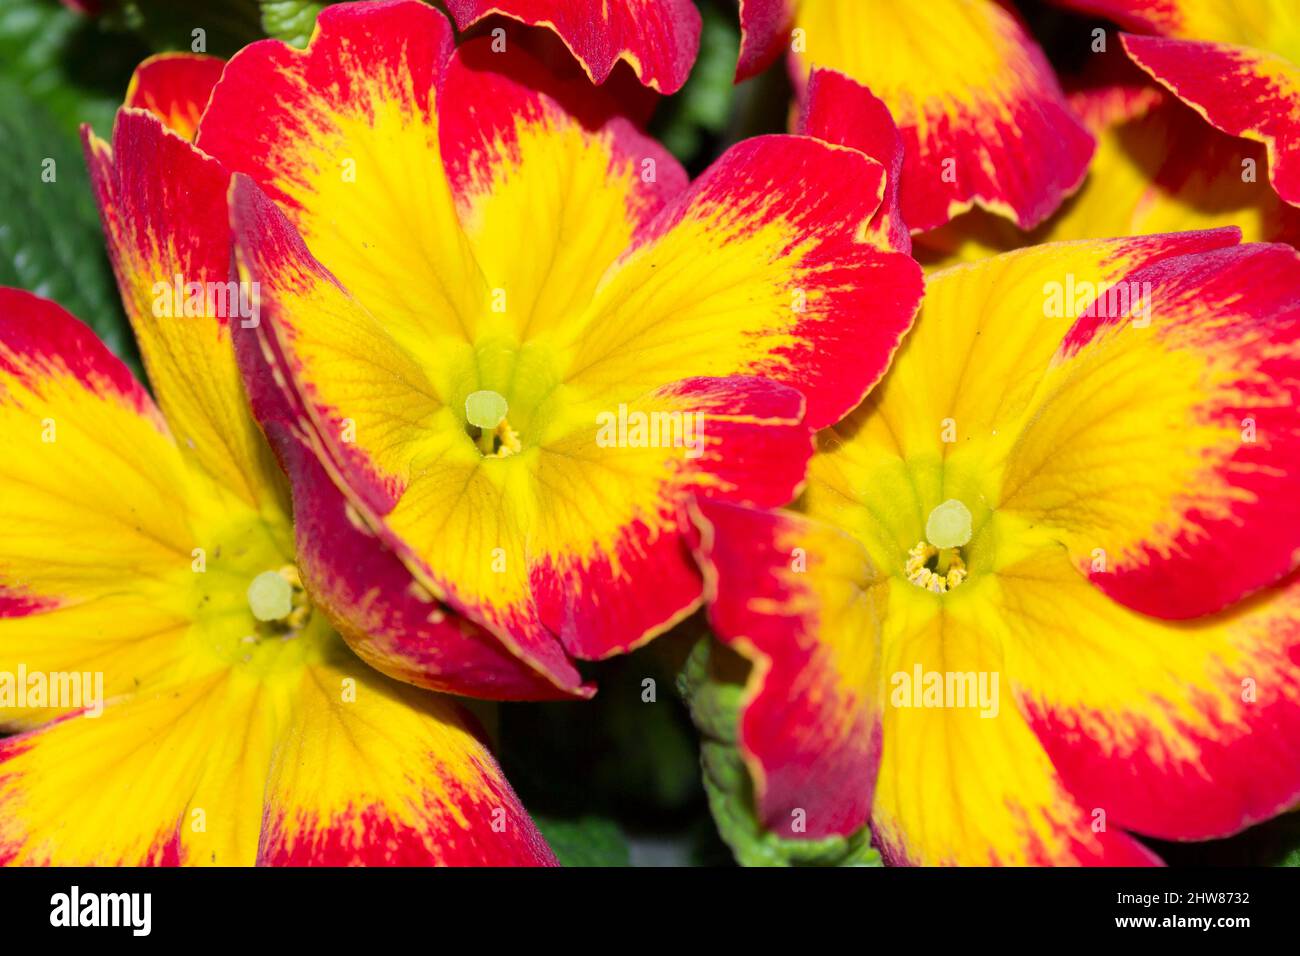 Flower Primrose close up. Selective focus. Natural background. Stock Photo